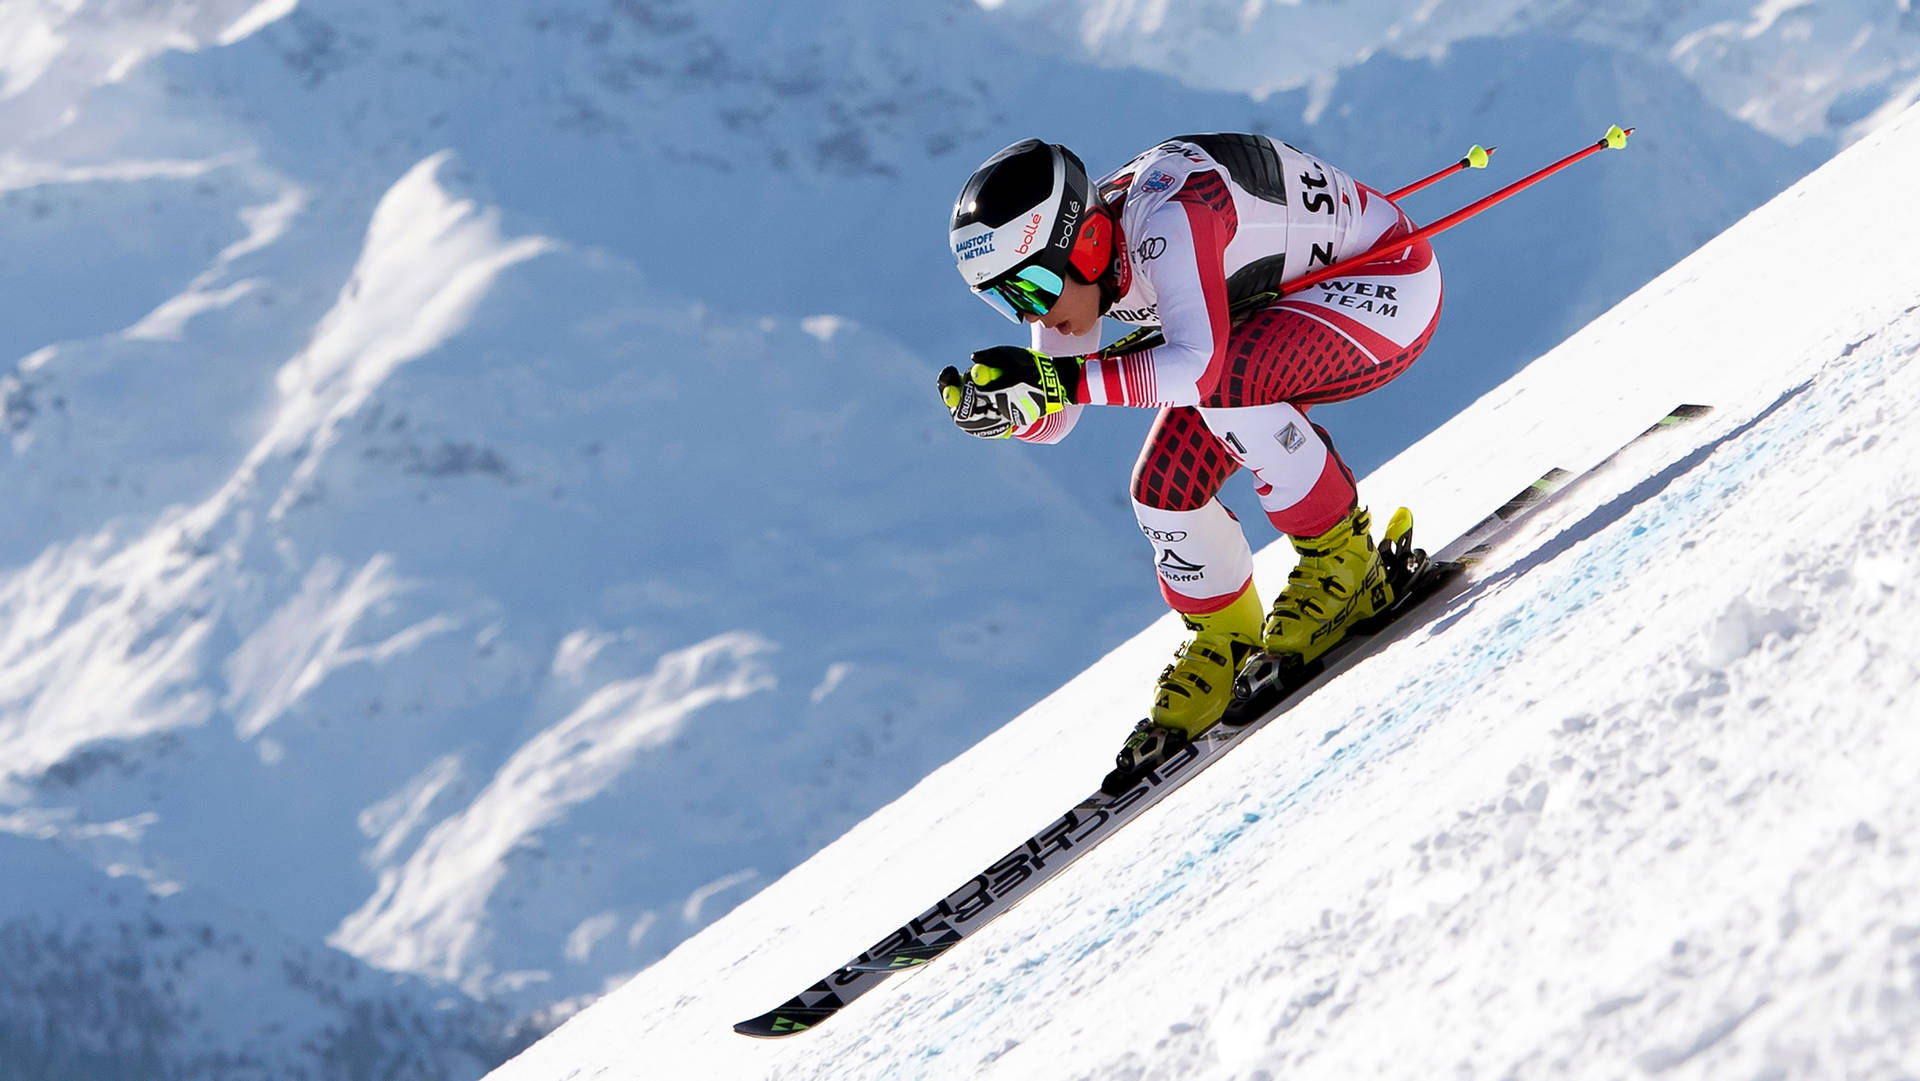 Professional Alpine Skier Nicole Schmidhofer in Competition Wallpaper